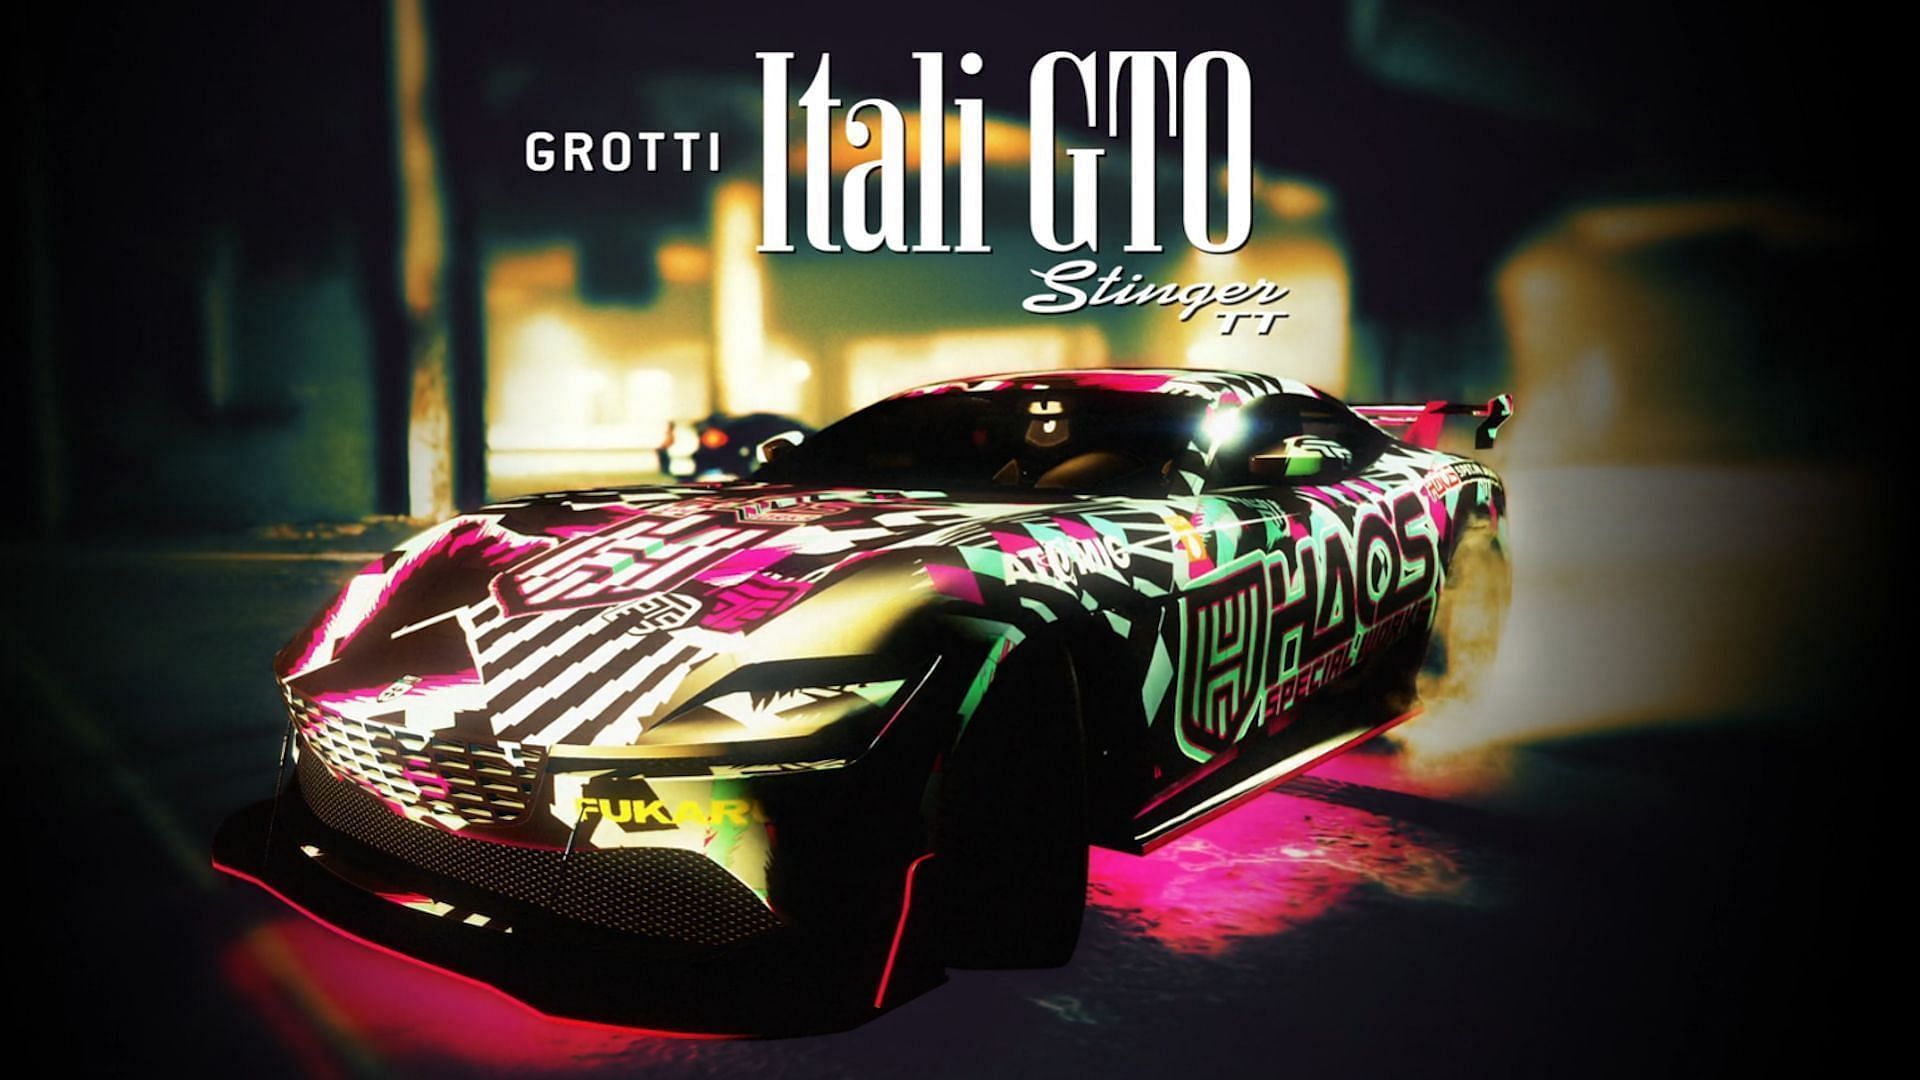 The new Grotti Itali GTO Stinger TT (Image via Rockstar Games)